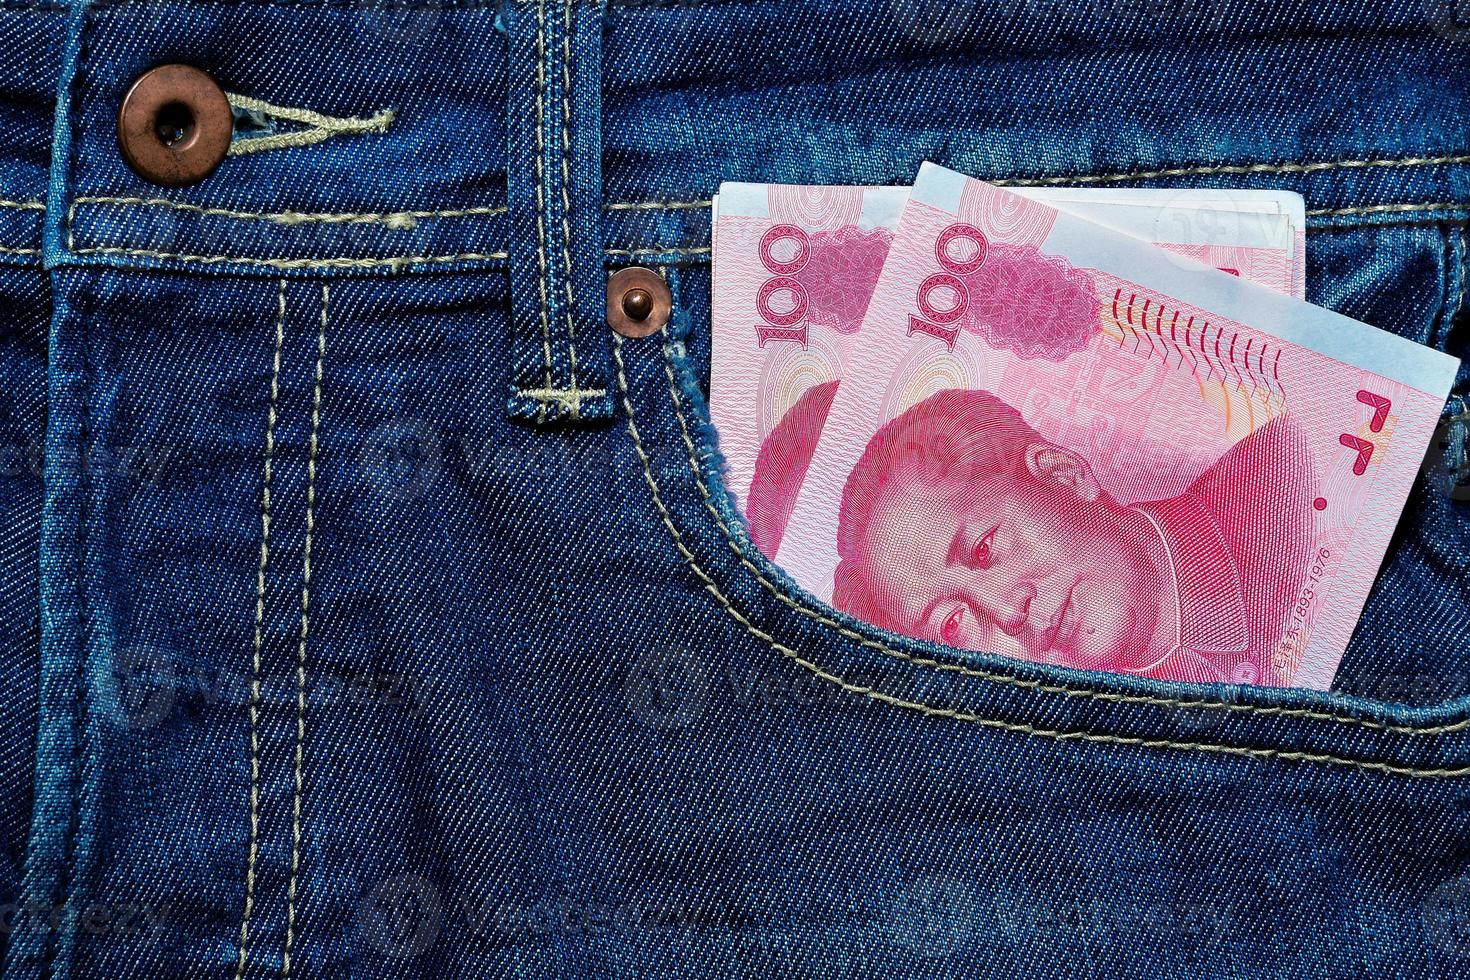 yuan eller rmb i jeans ficka, kinesisk valuta foto